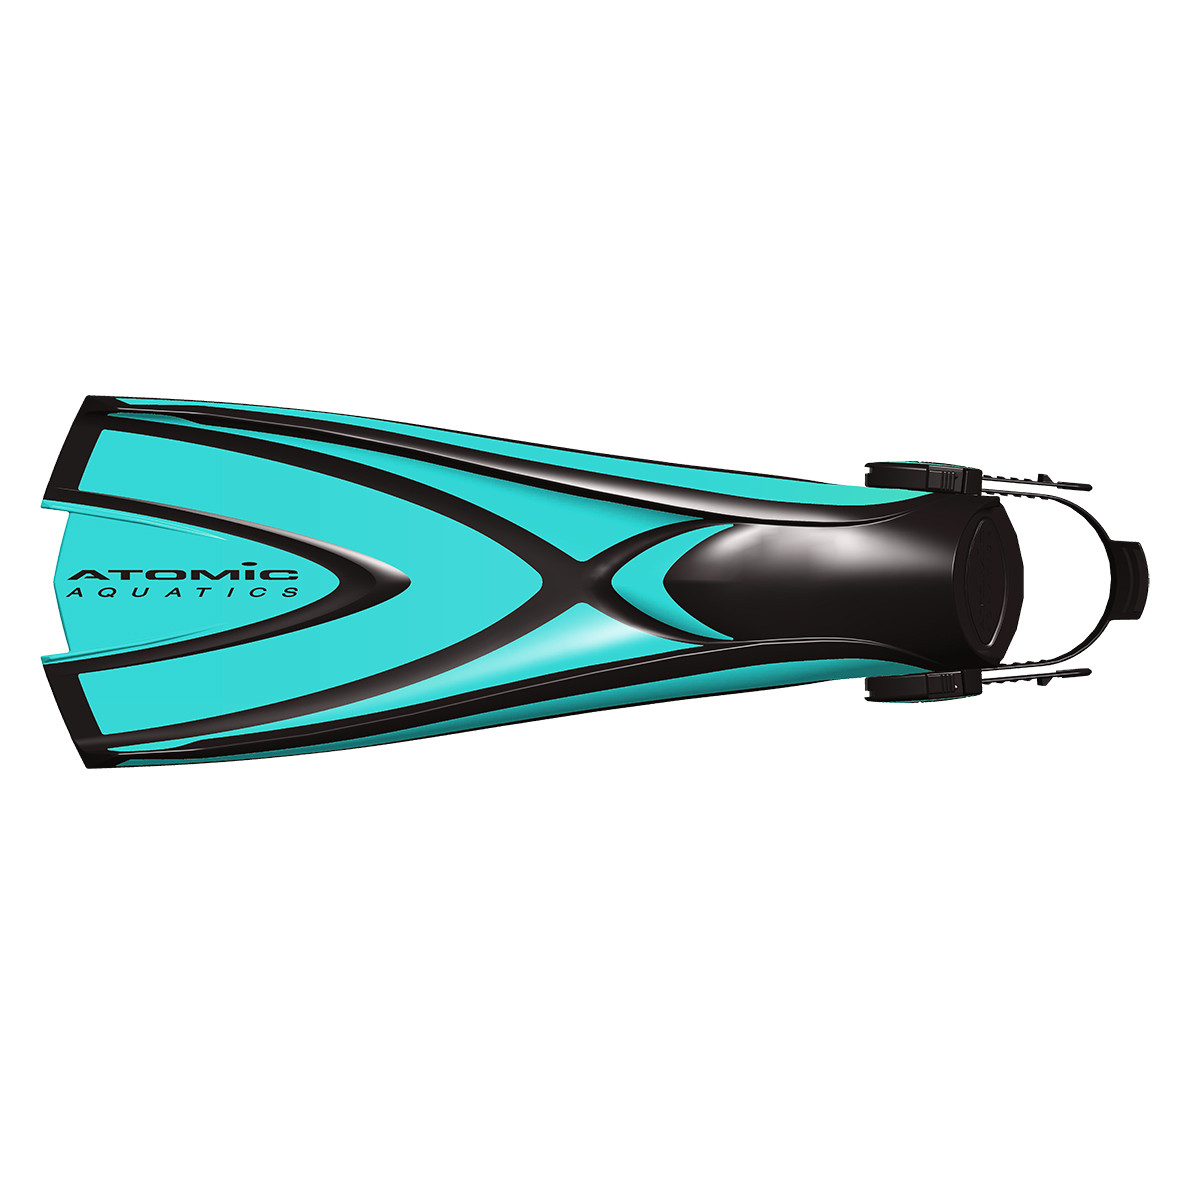 Atomic Aquatics X1 BladeFin For Sale Online in Canada - Dan's Dive Shop